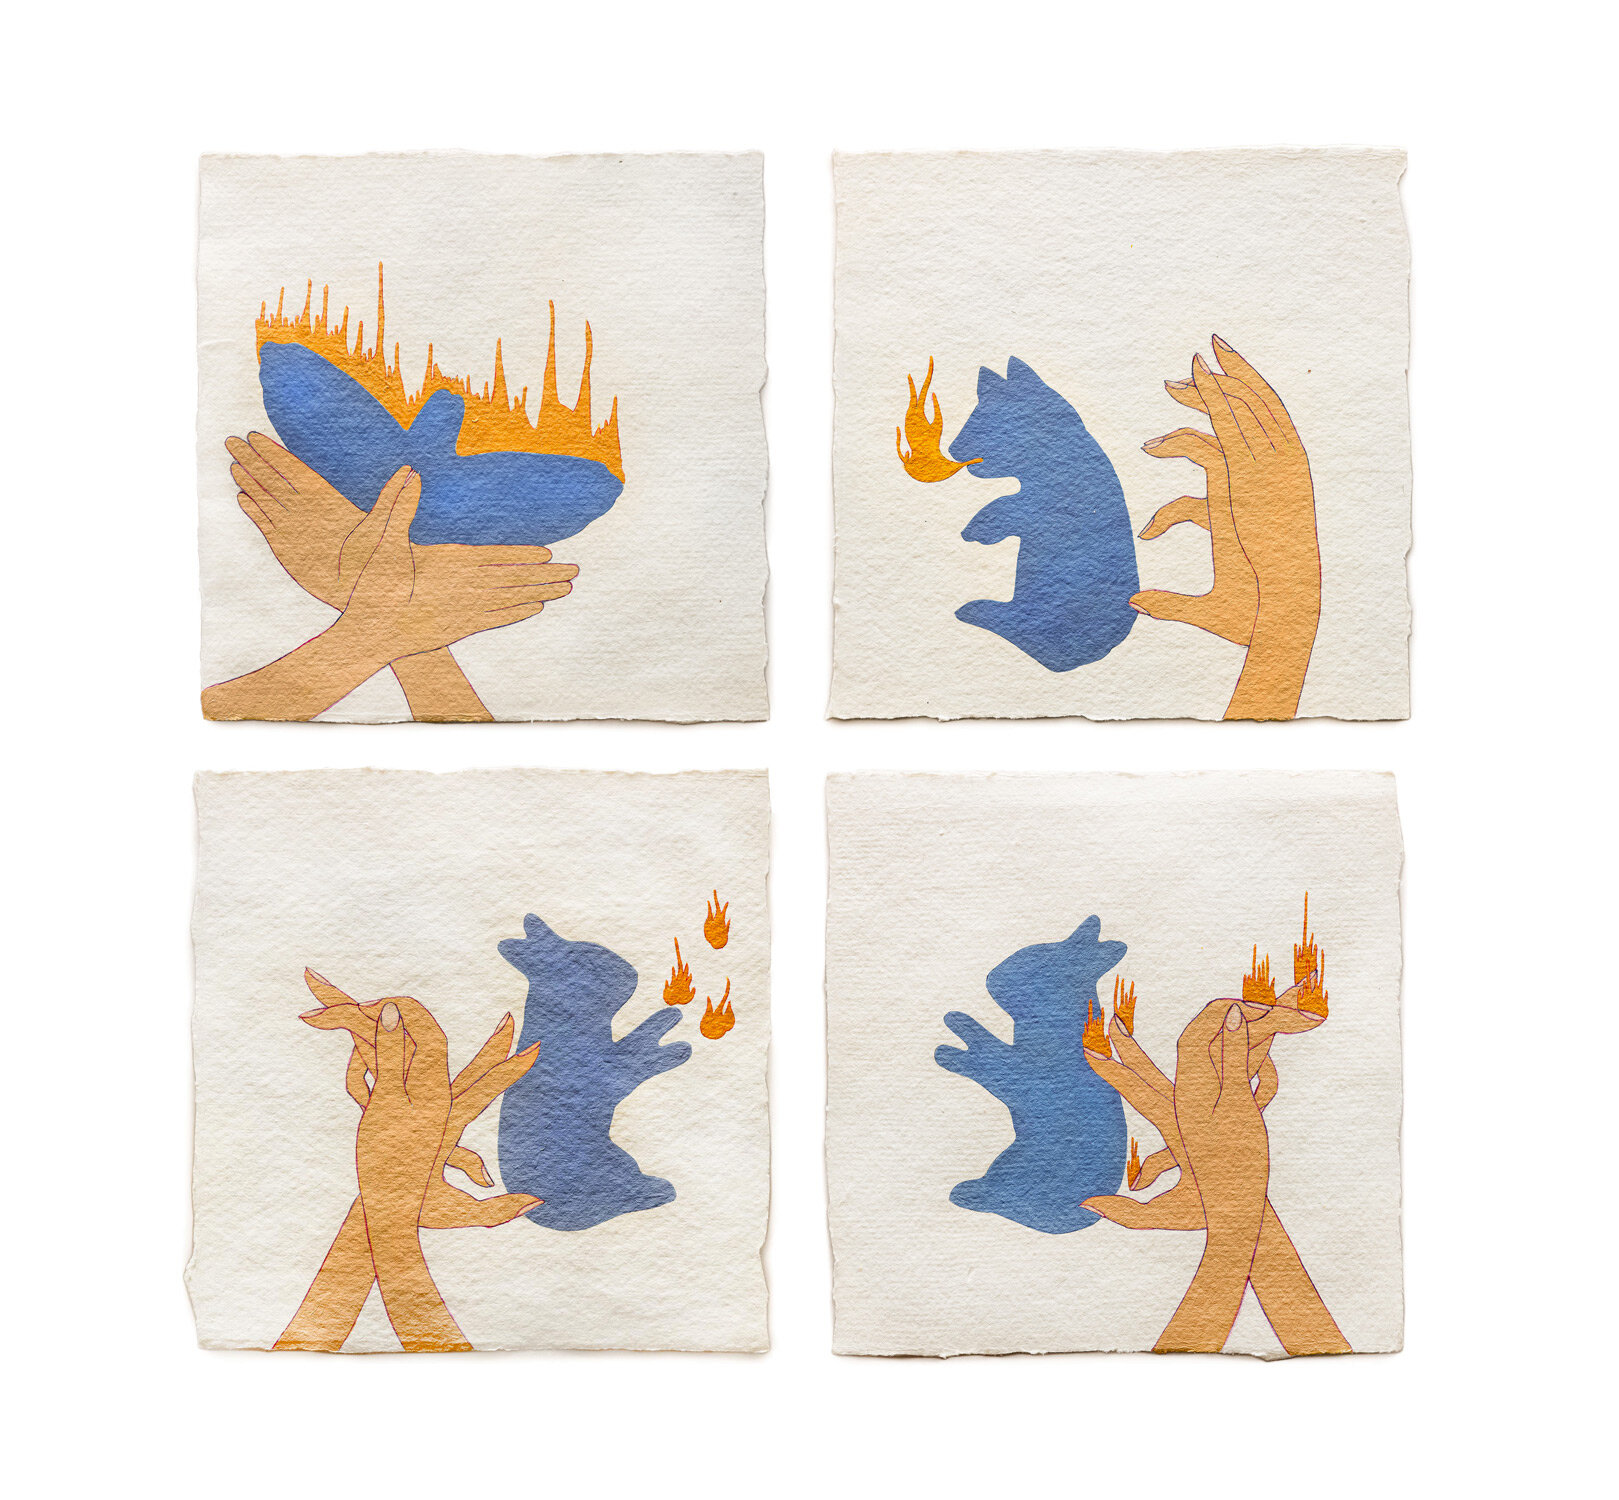   Fire Diary (Hand Shadows),  2020 Acrylic on paper, 6” x 6” each 